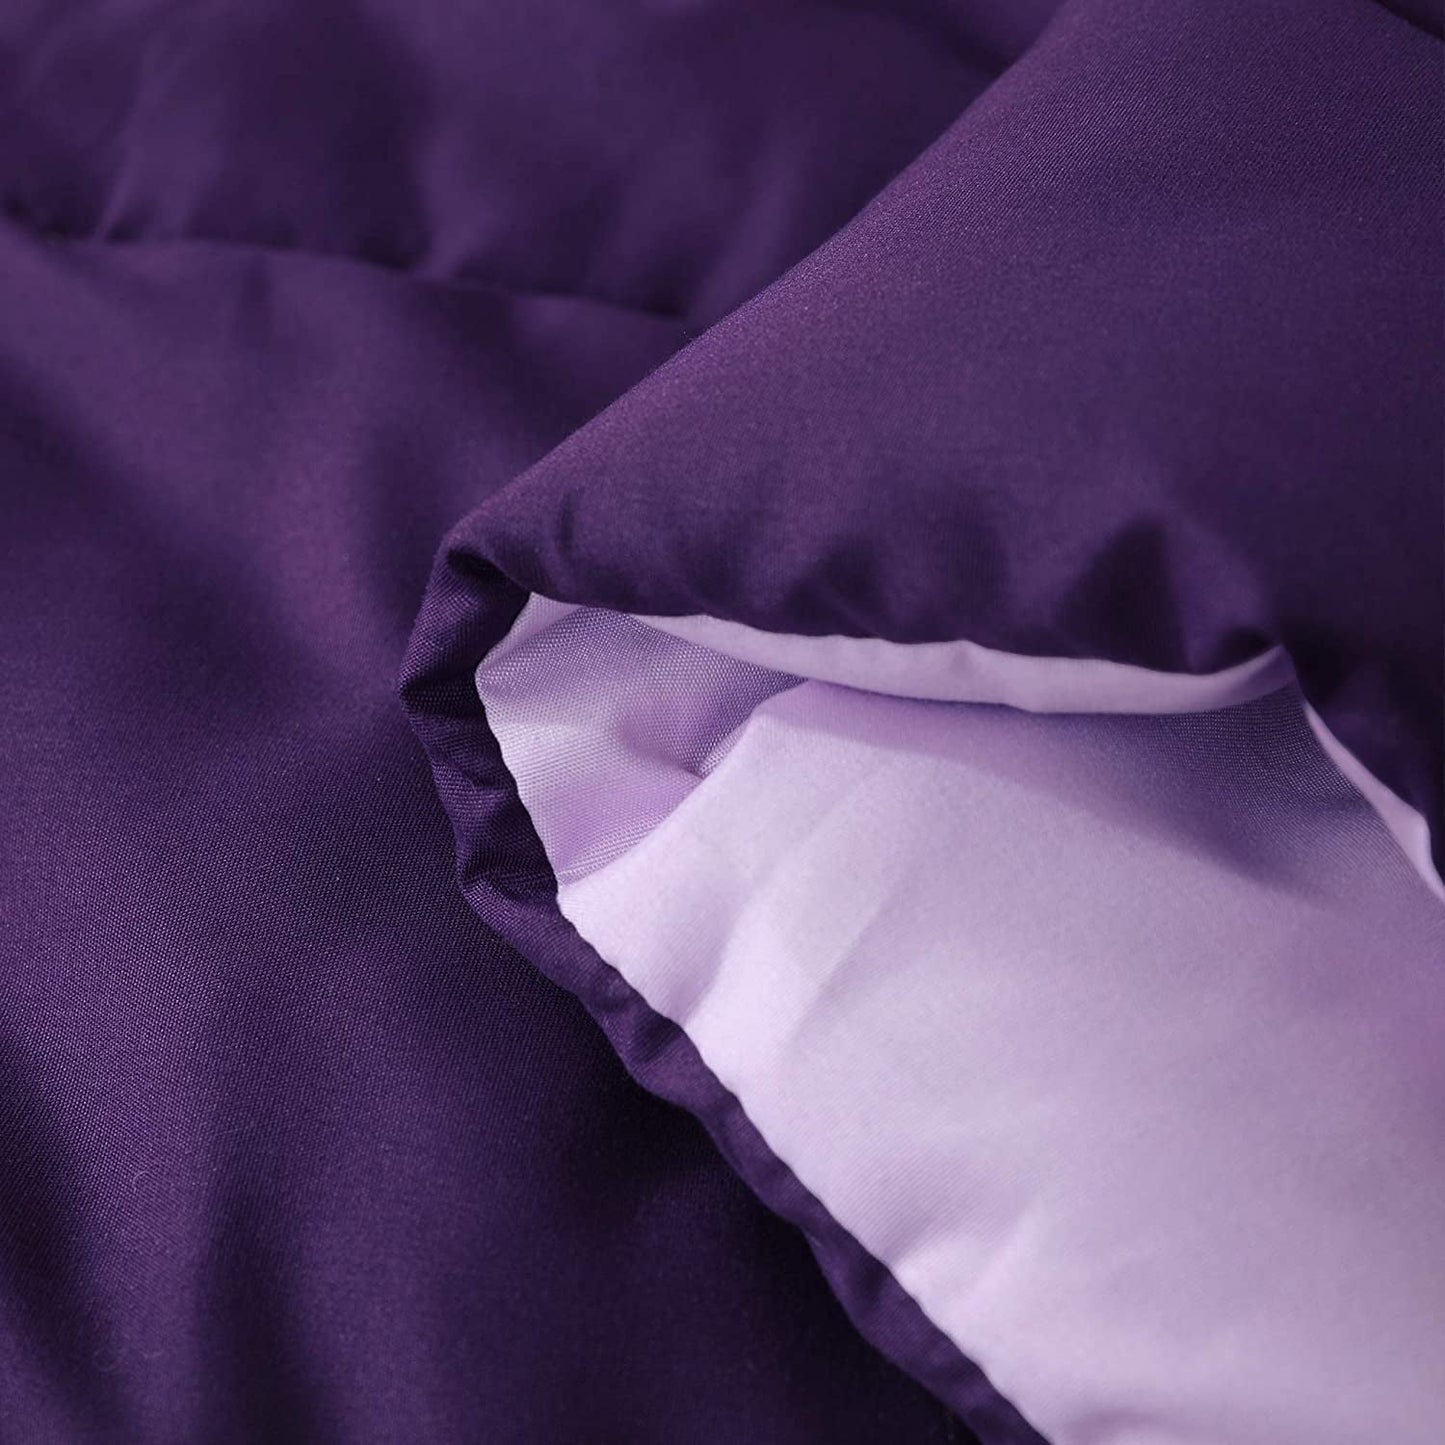 Exclusivo Mezcla Lightweight Reversible 3-Piece Comforter Set All Seasons, Down Alternative Comforter with 2 Pillow Shams, King Size, Deep Purple/ Lilac